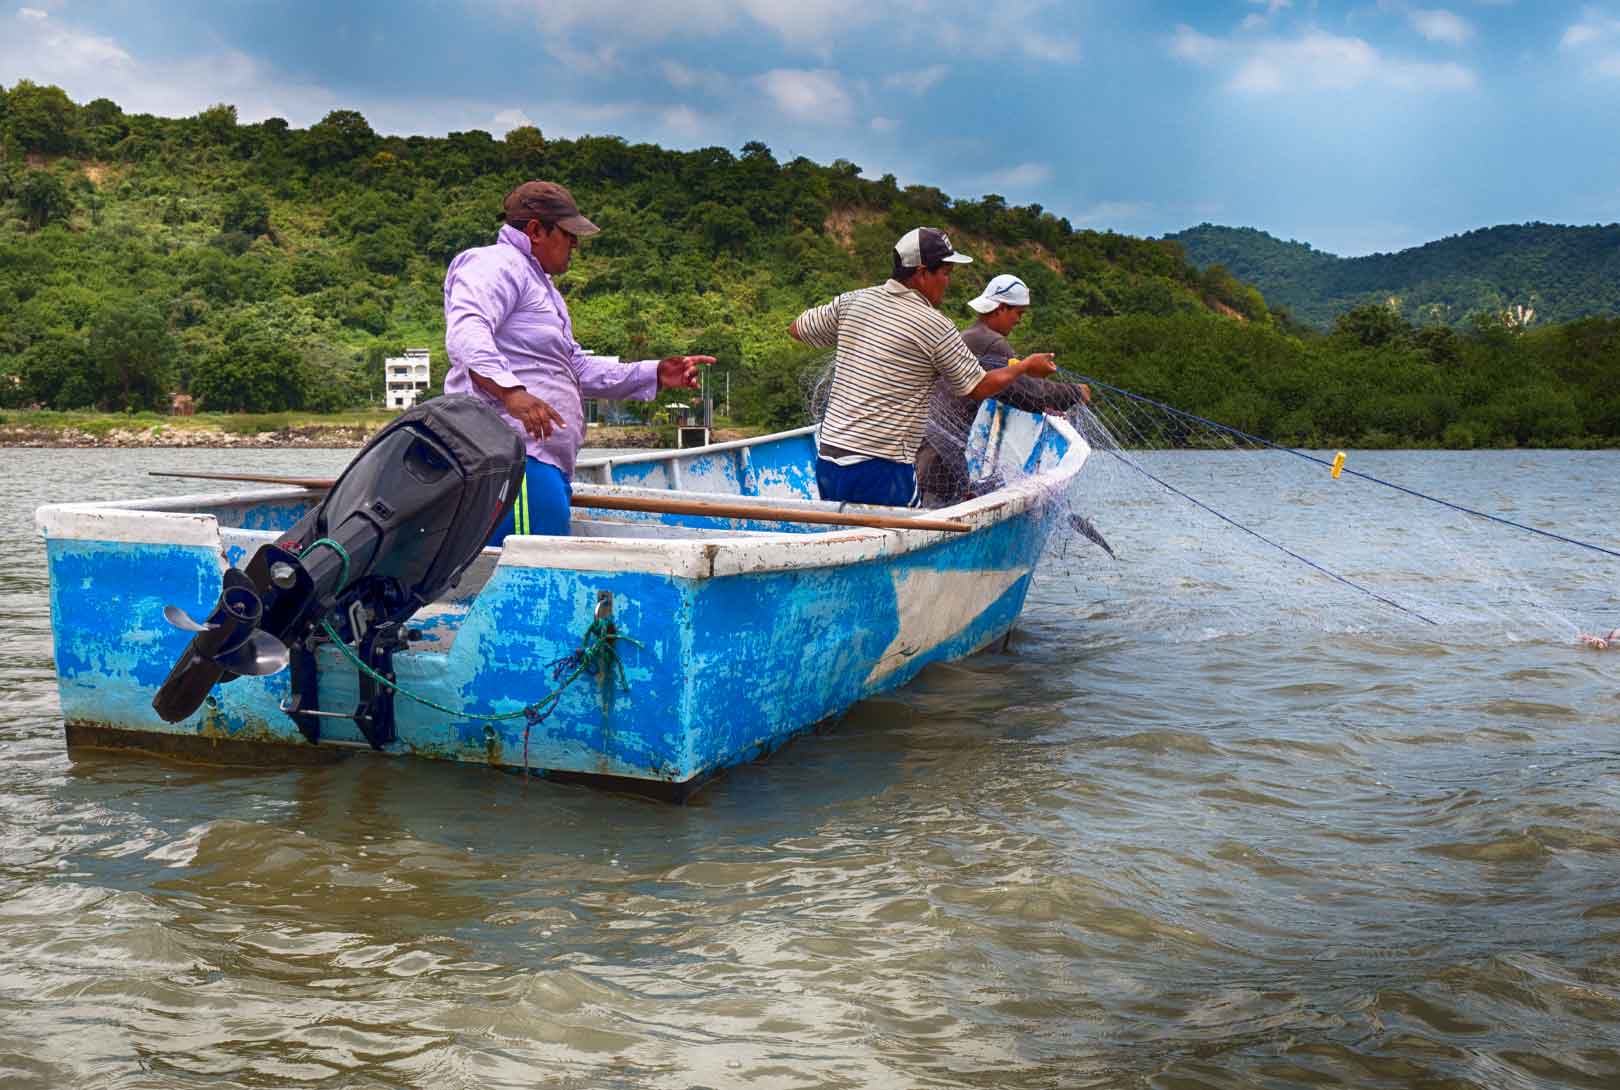 Two fishermen pulling in fishing nets on blue boat on the Chone River in Bahia de Caraquez Ecuador